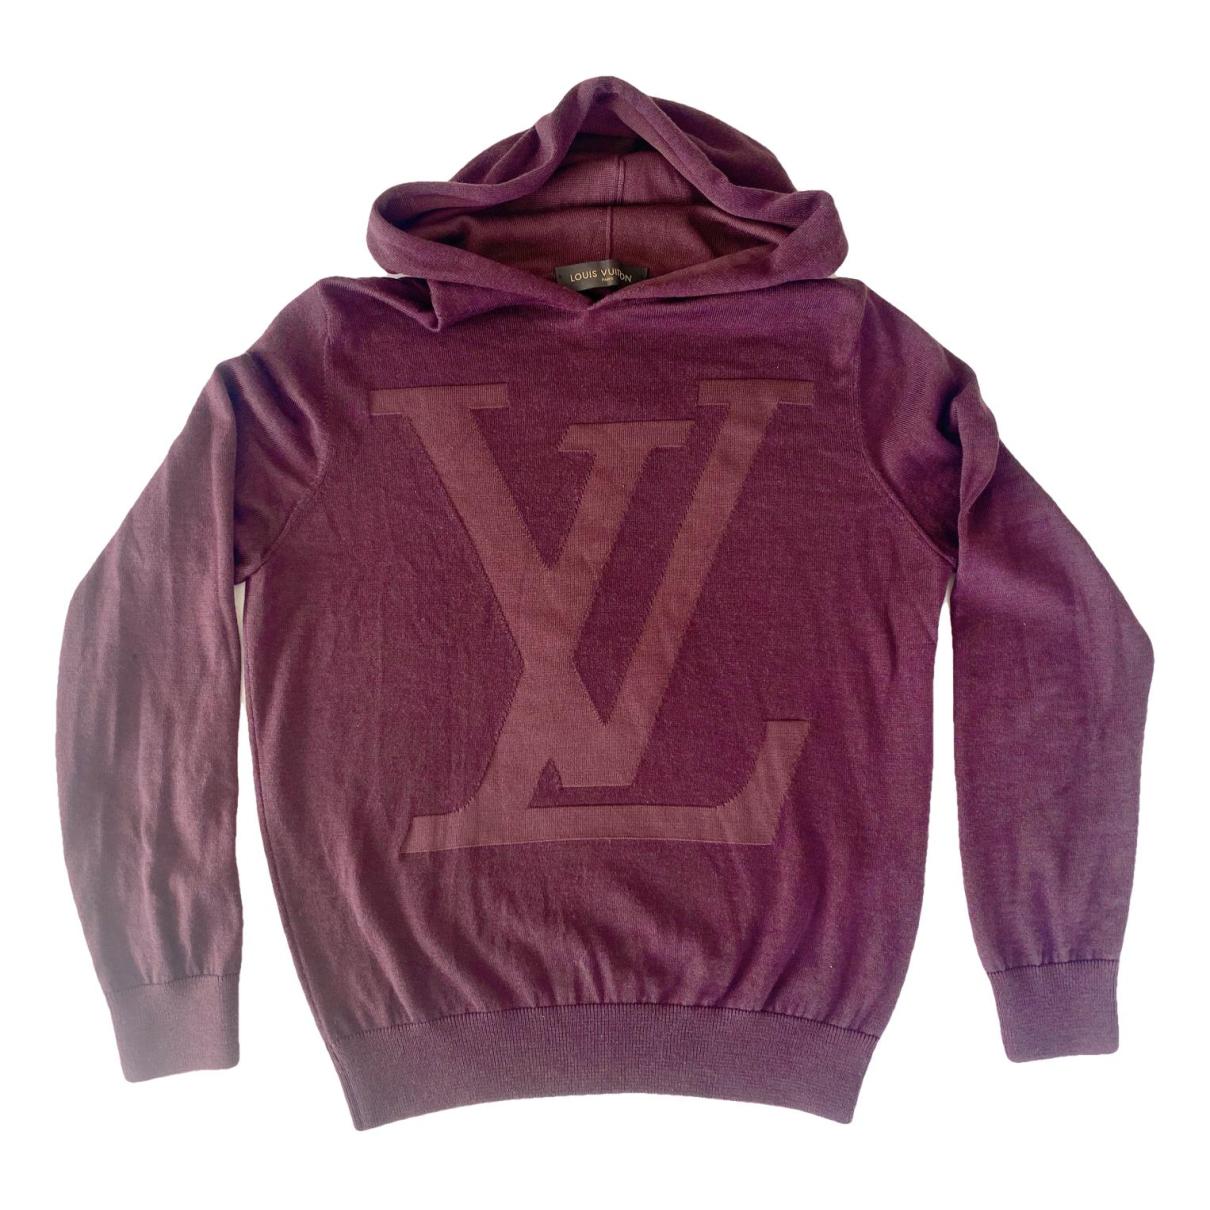 Wool sweatshirt Louis Vuitton Burgundy size S International in